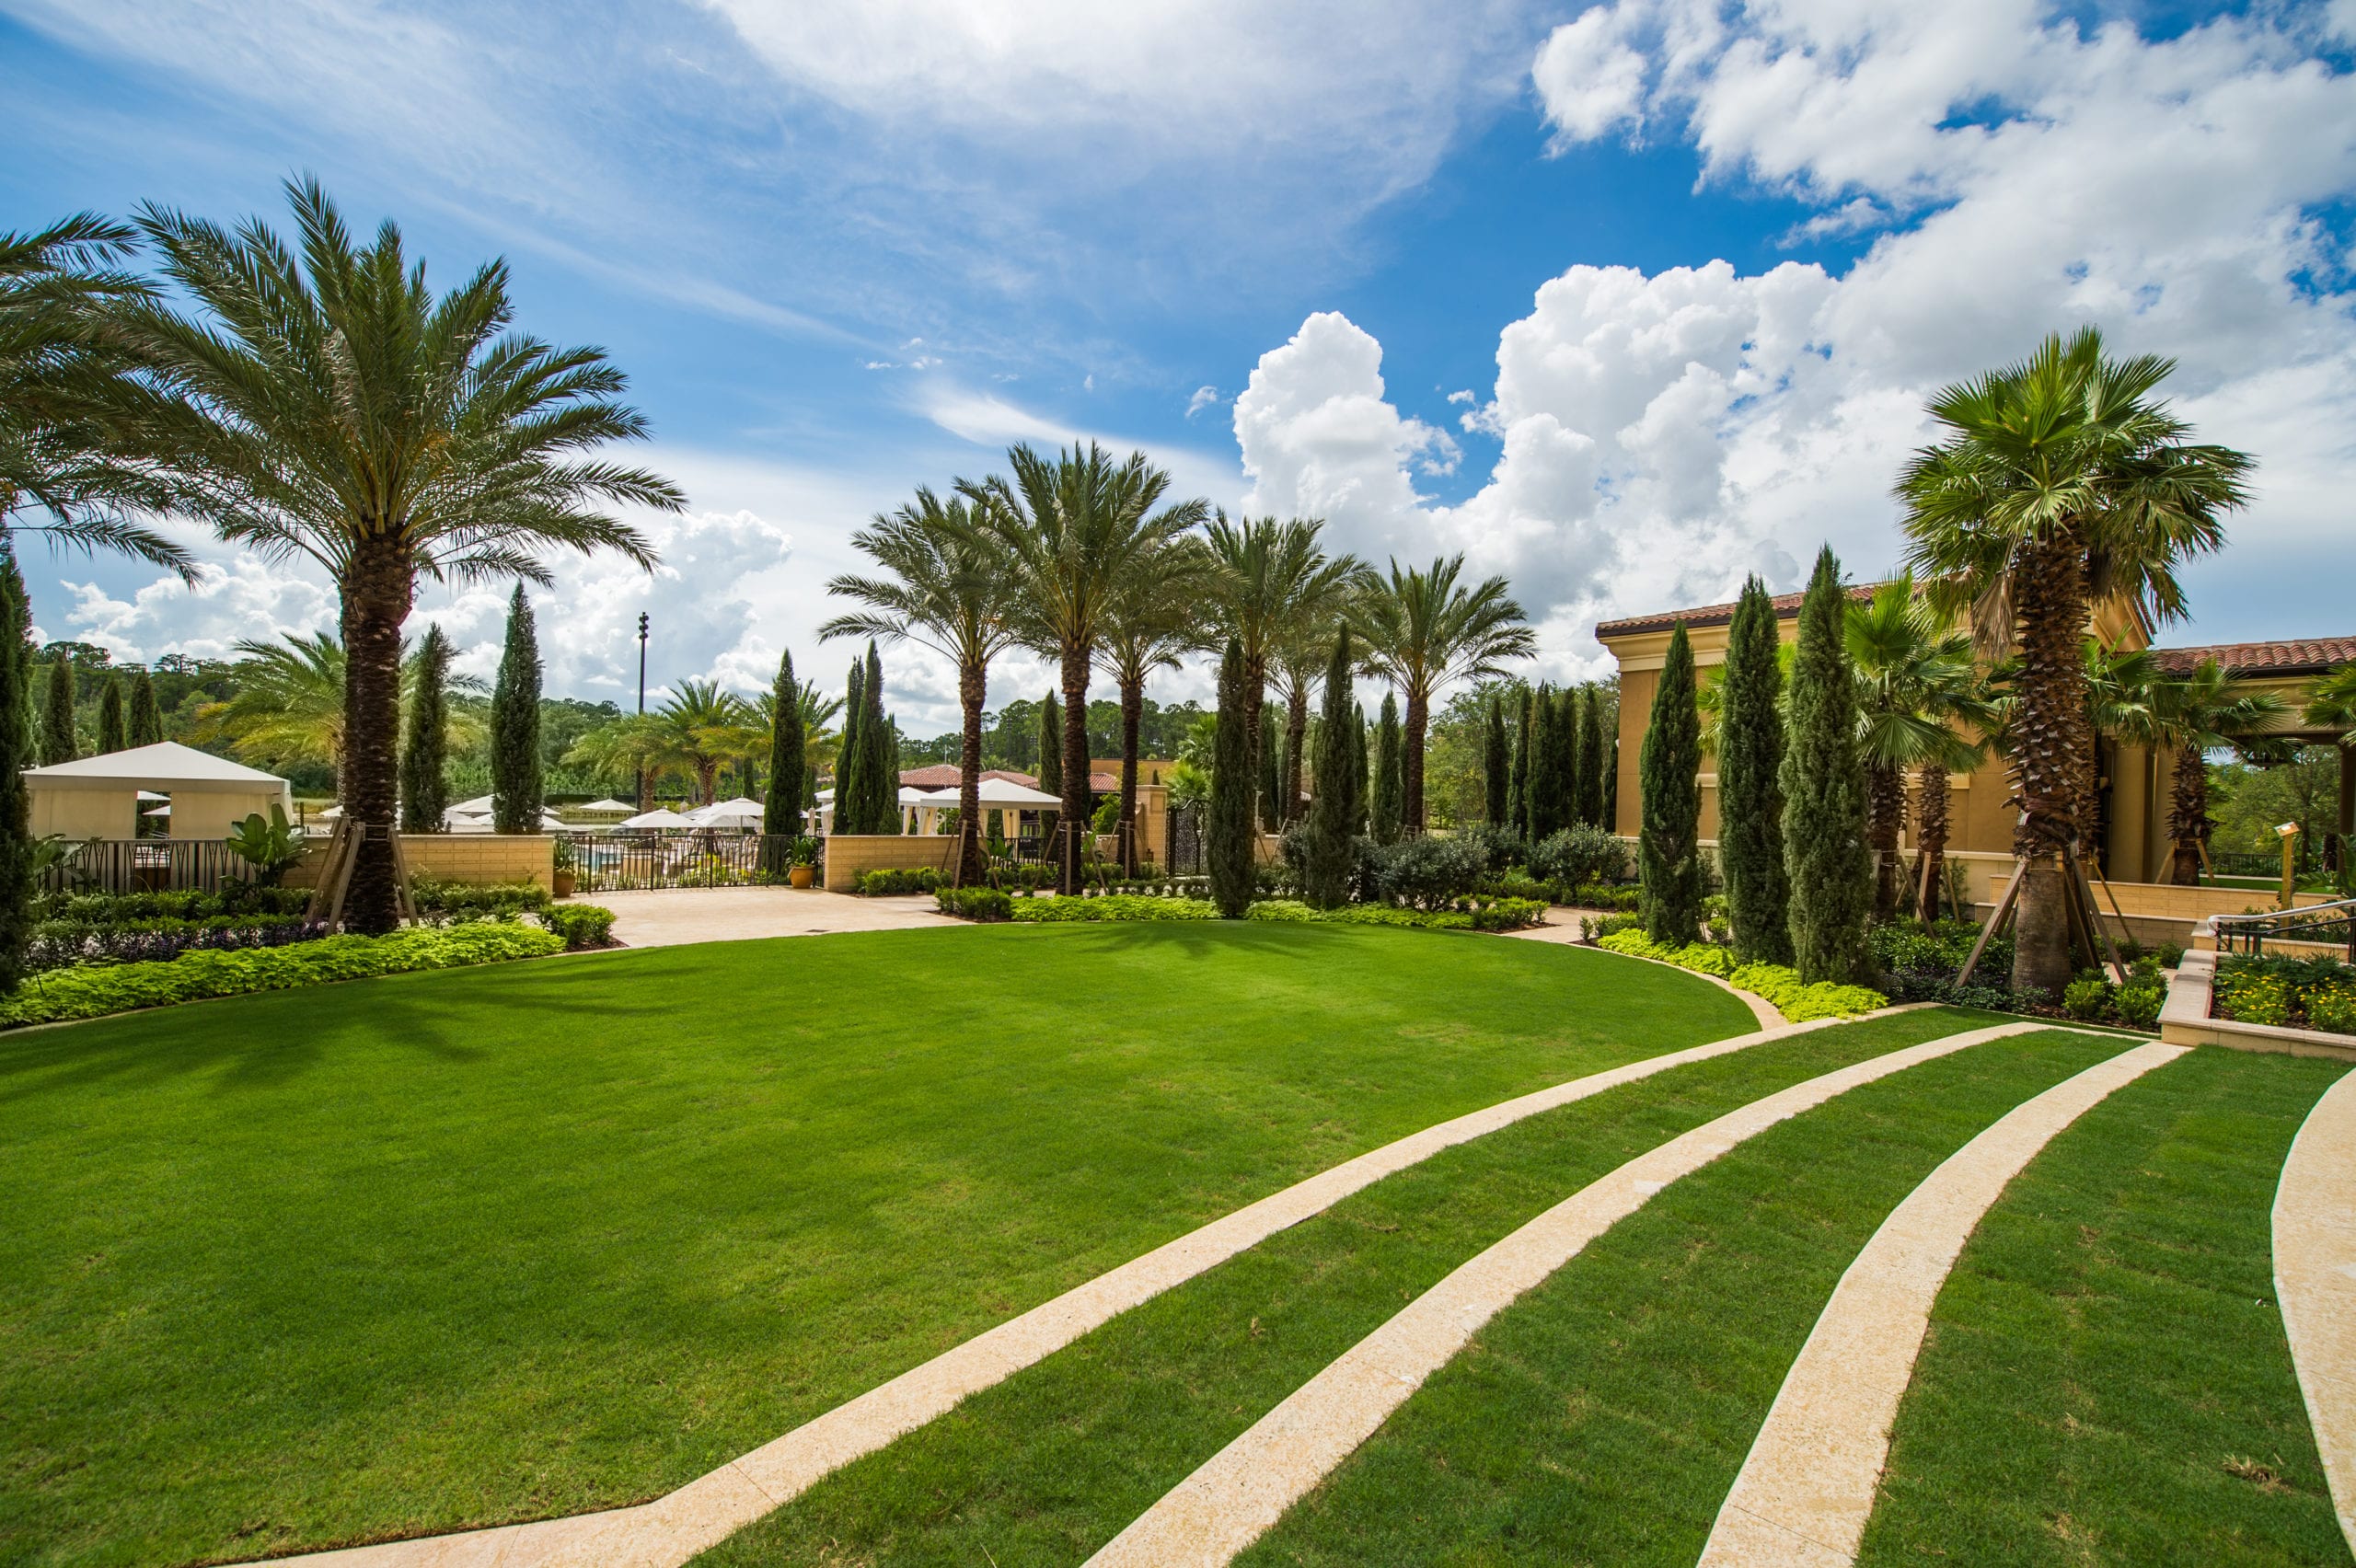 IU C&I Studios Portfolio Four Seasons Building with green lawns, trees and palm trees